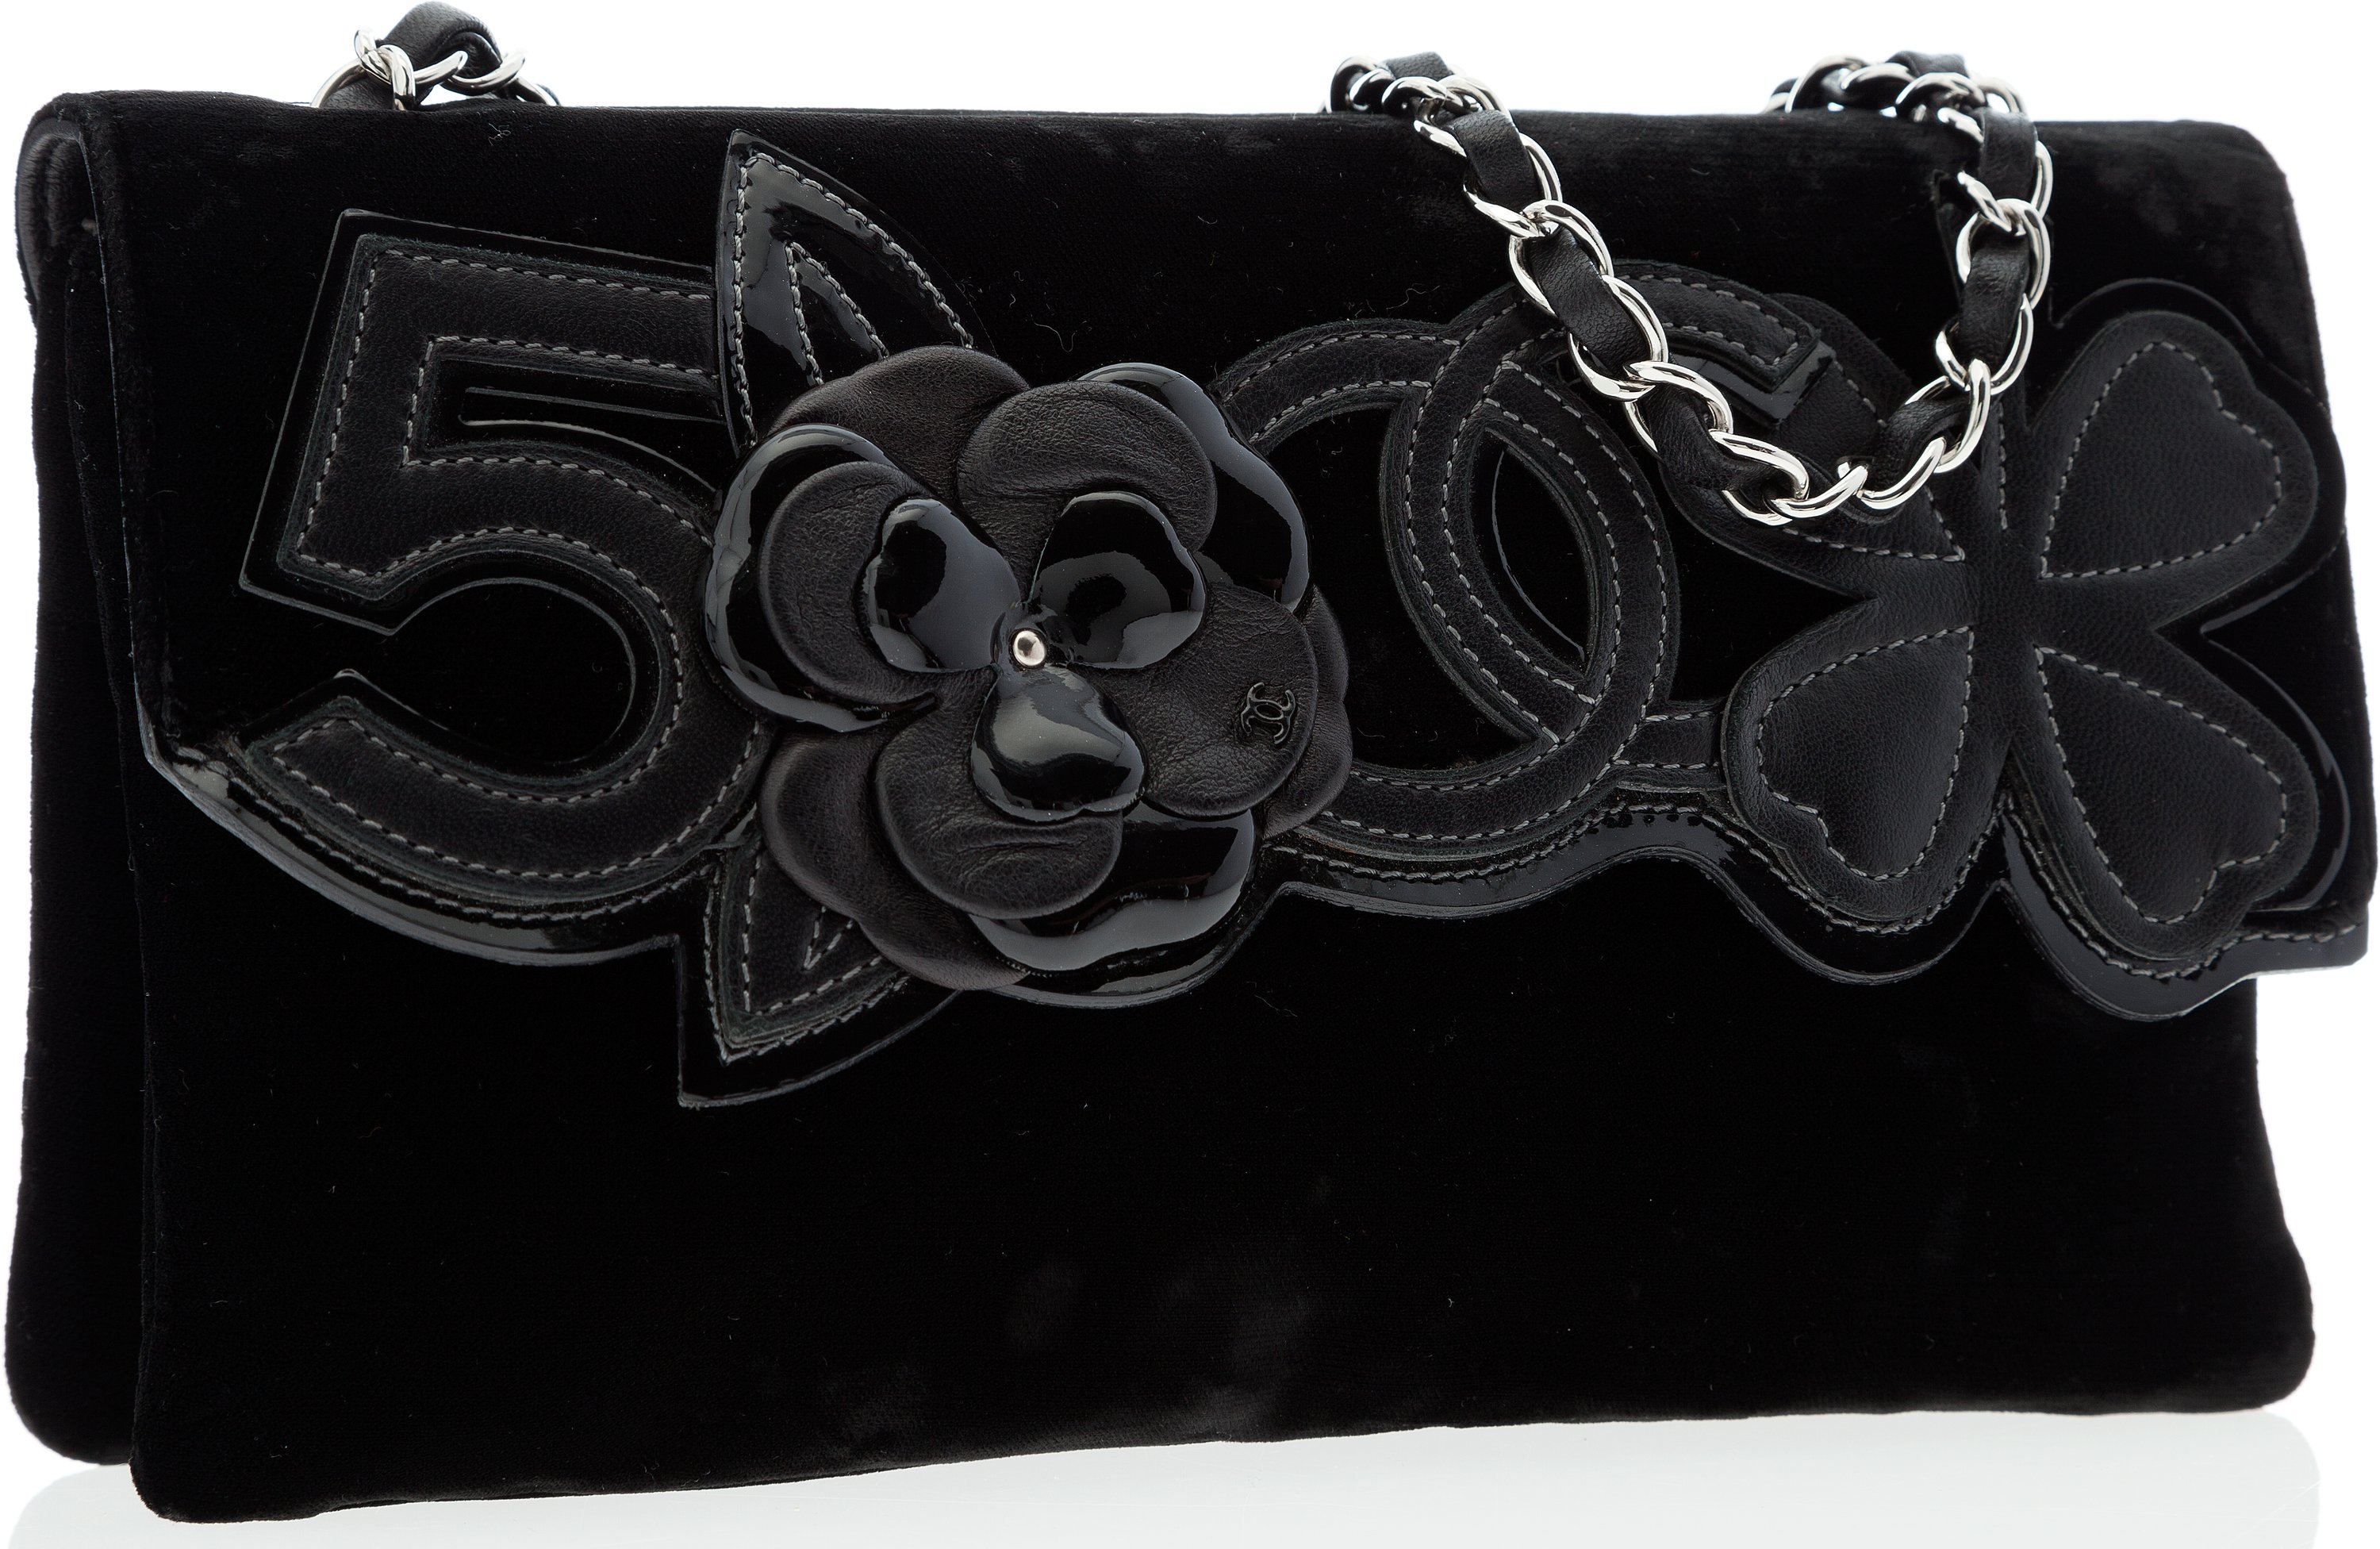 Chanel Black Velvet Camellia No. 5 Clutch Bag with Silver Hardware